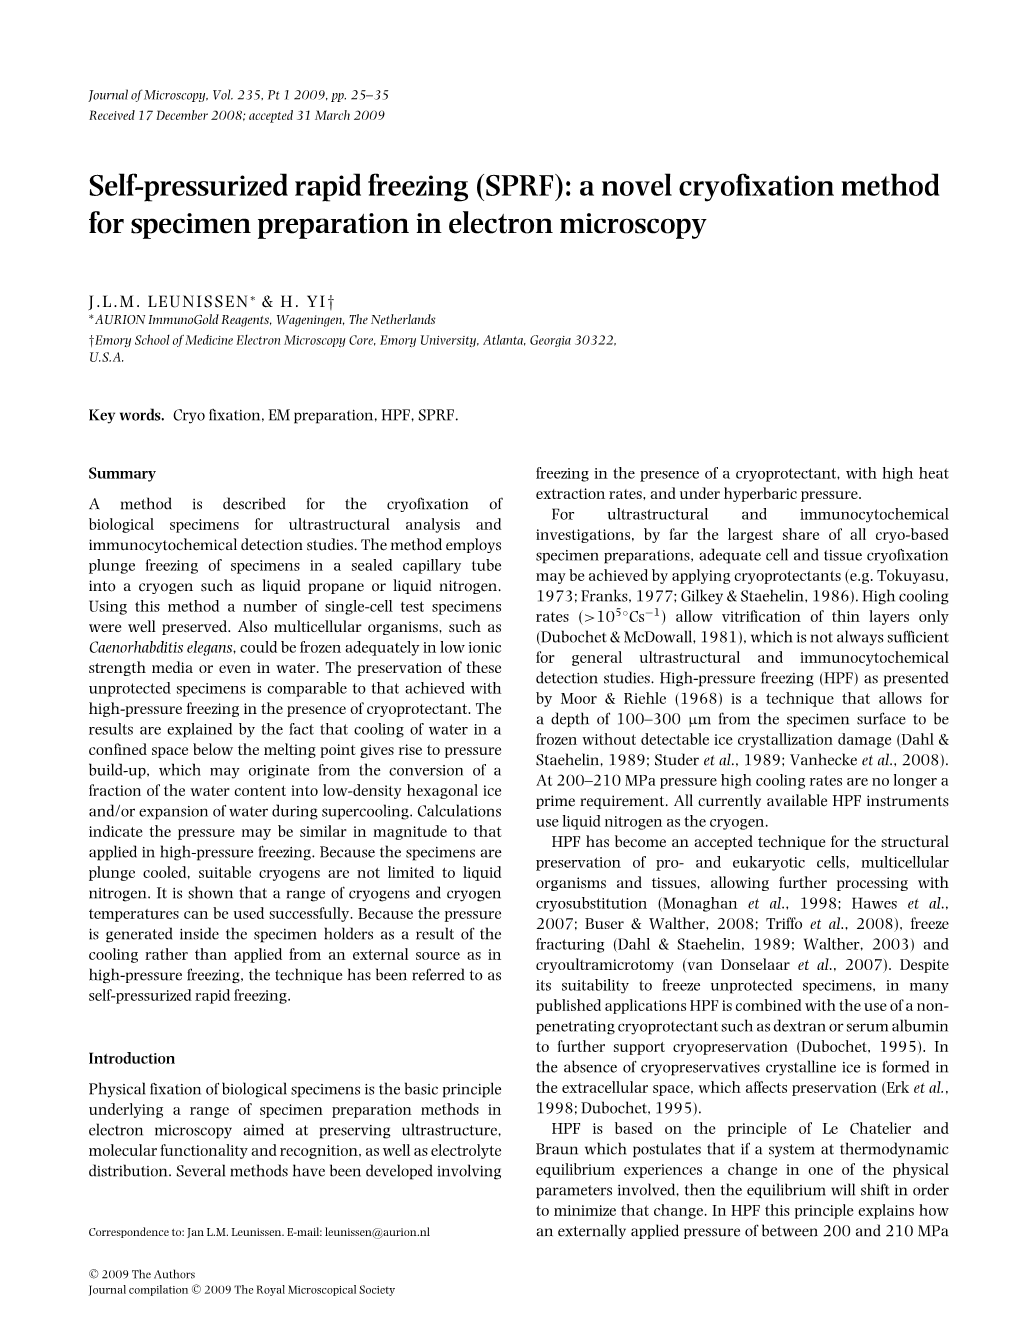 Self-Pressurized Rapid Freezing (SPRF): a Novel Cryofixation Method for Specimen Preparation in Electron Microscopy